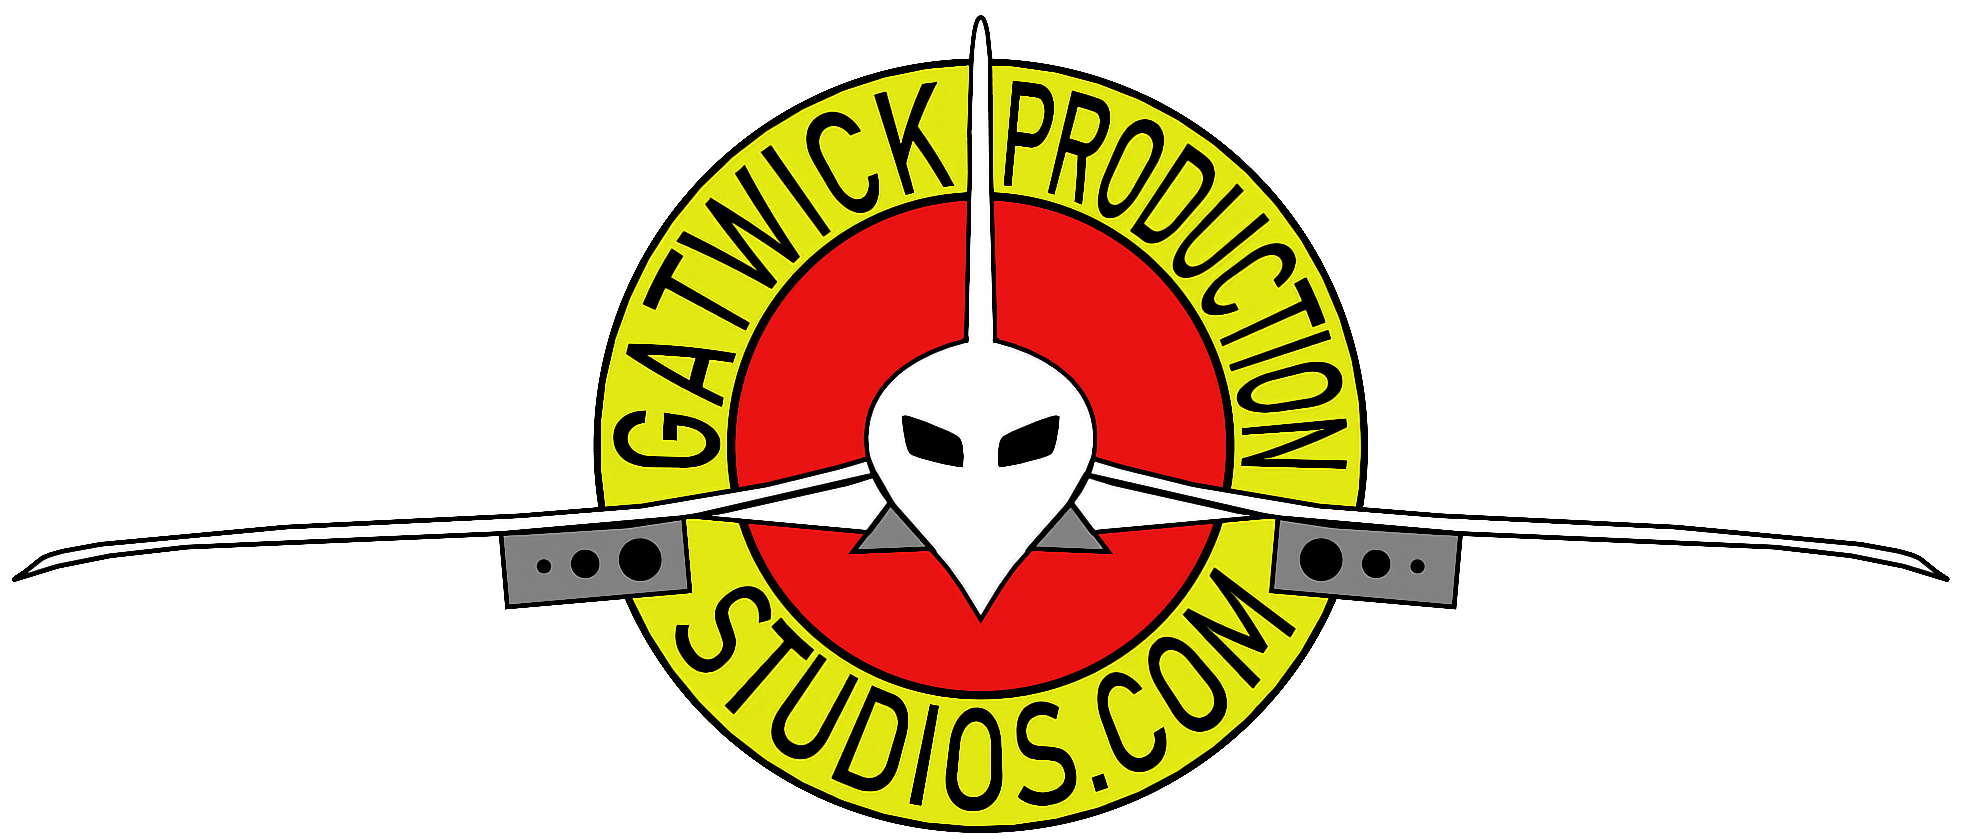 Gatwick Production Studios